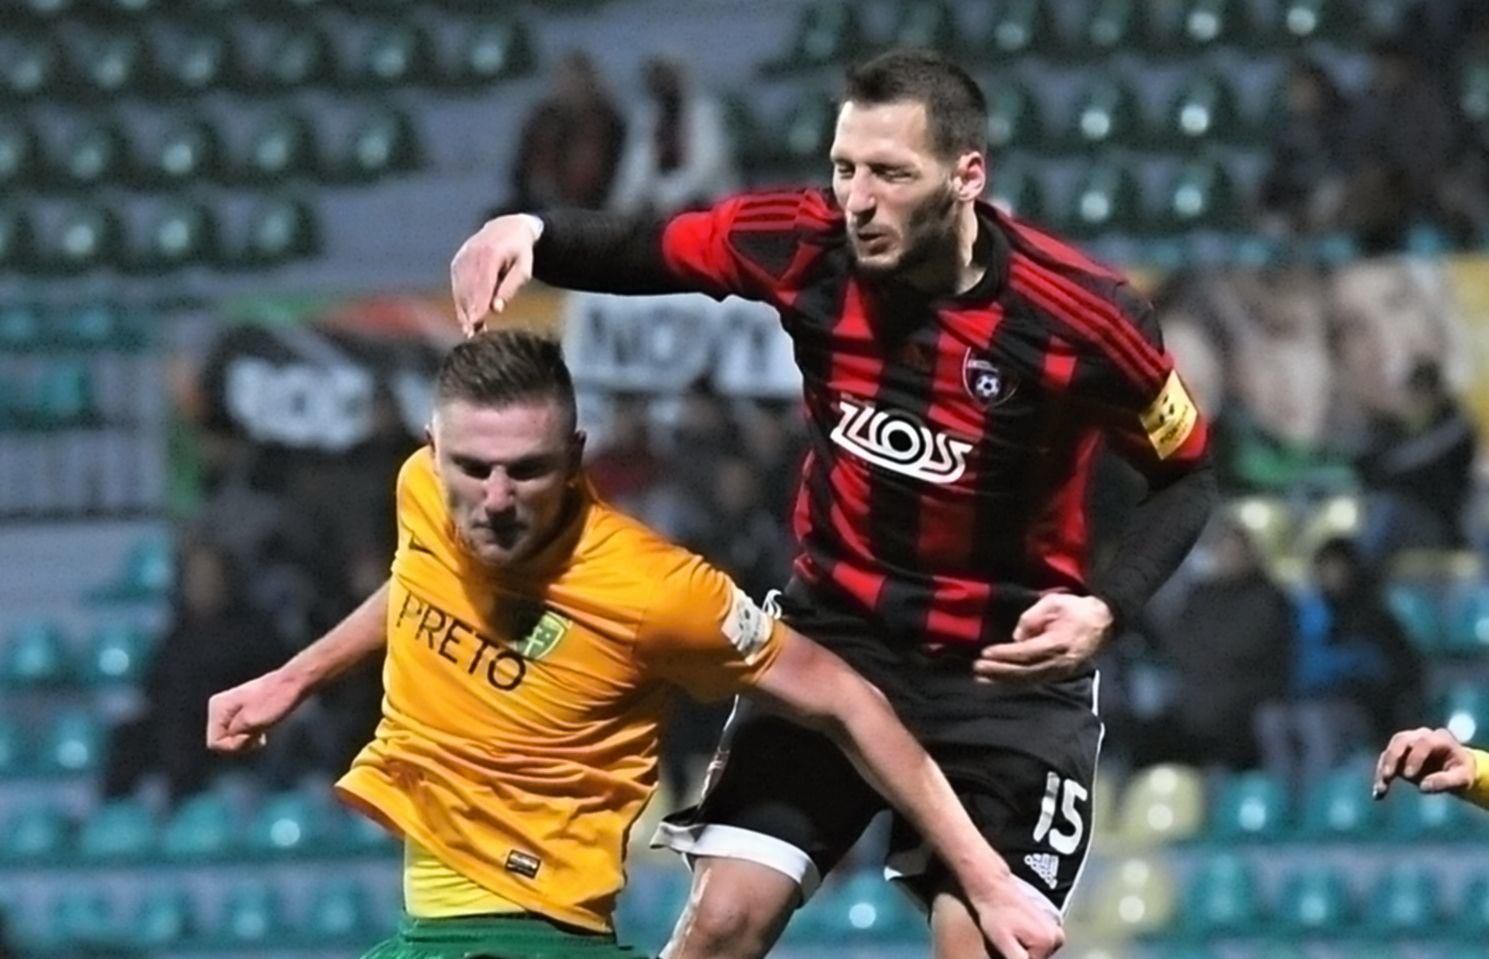 Milan Škriniar ešte v drese MŠK Žilina proti Milošovi Nikoličovi zo Spartaka Trnava (2015)